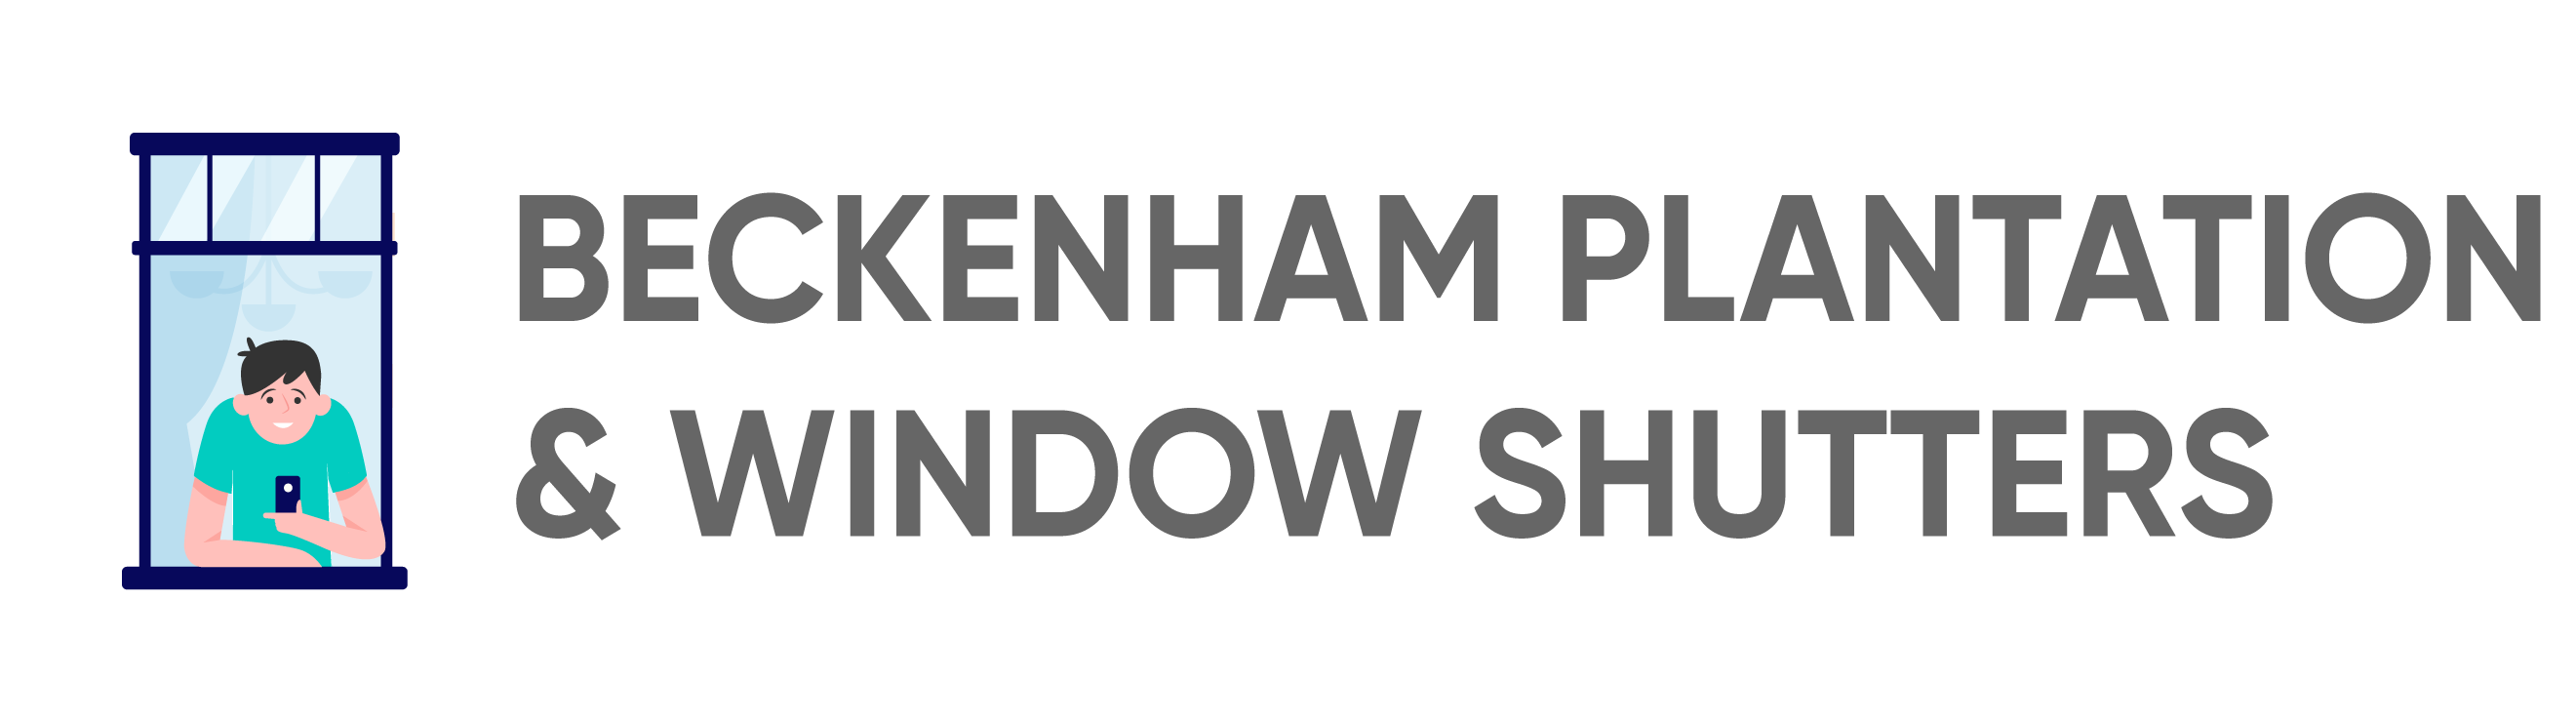 Beckenham Plantation & Window Shutters